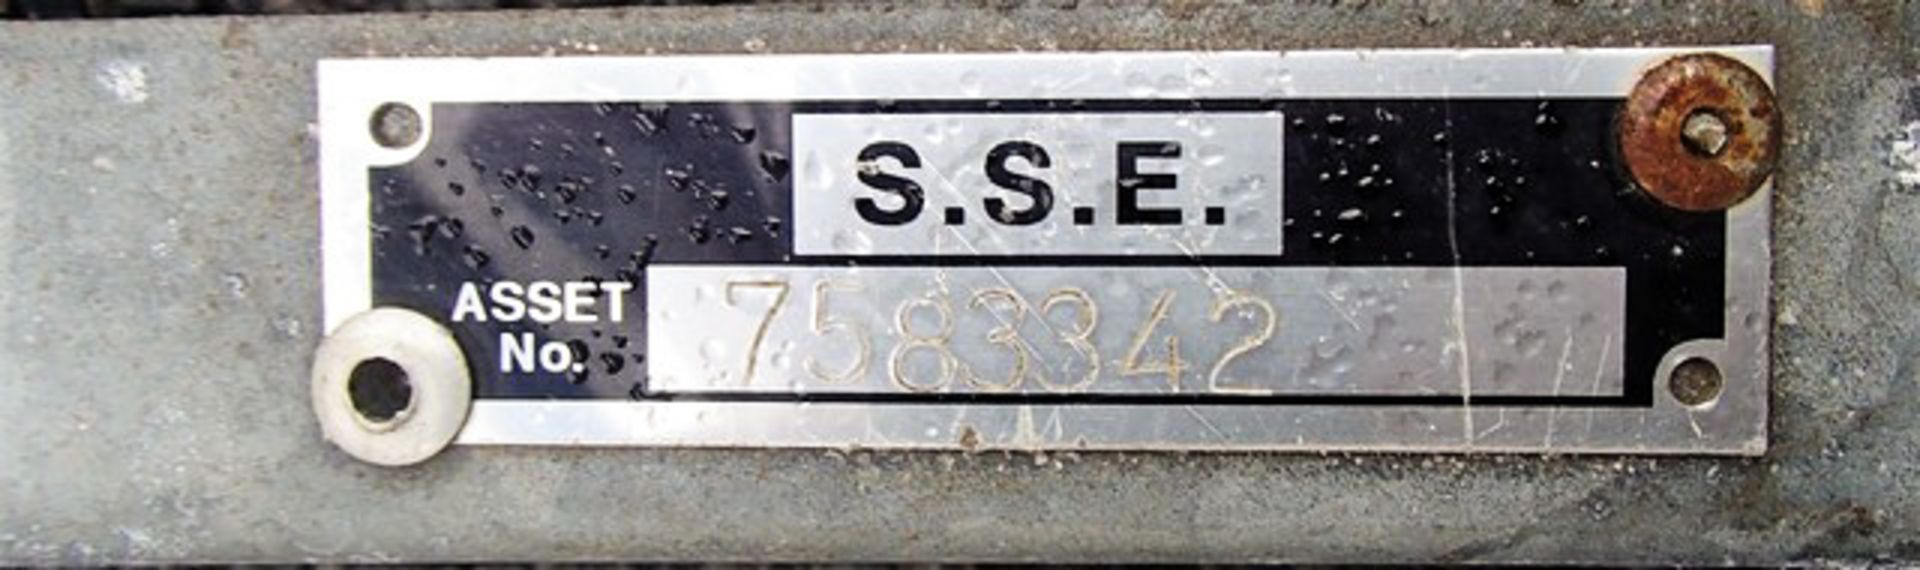 1993 5' X 3' BATESON SINGLE AXLE TRAILER, MODEL 500, S/N 16878, ASSET - 758-3342 - Image 5 of 5